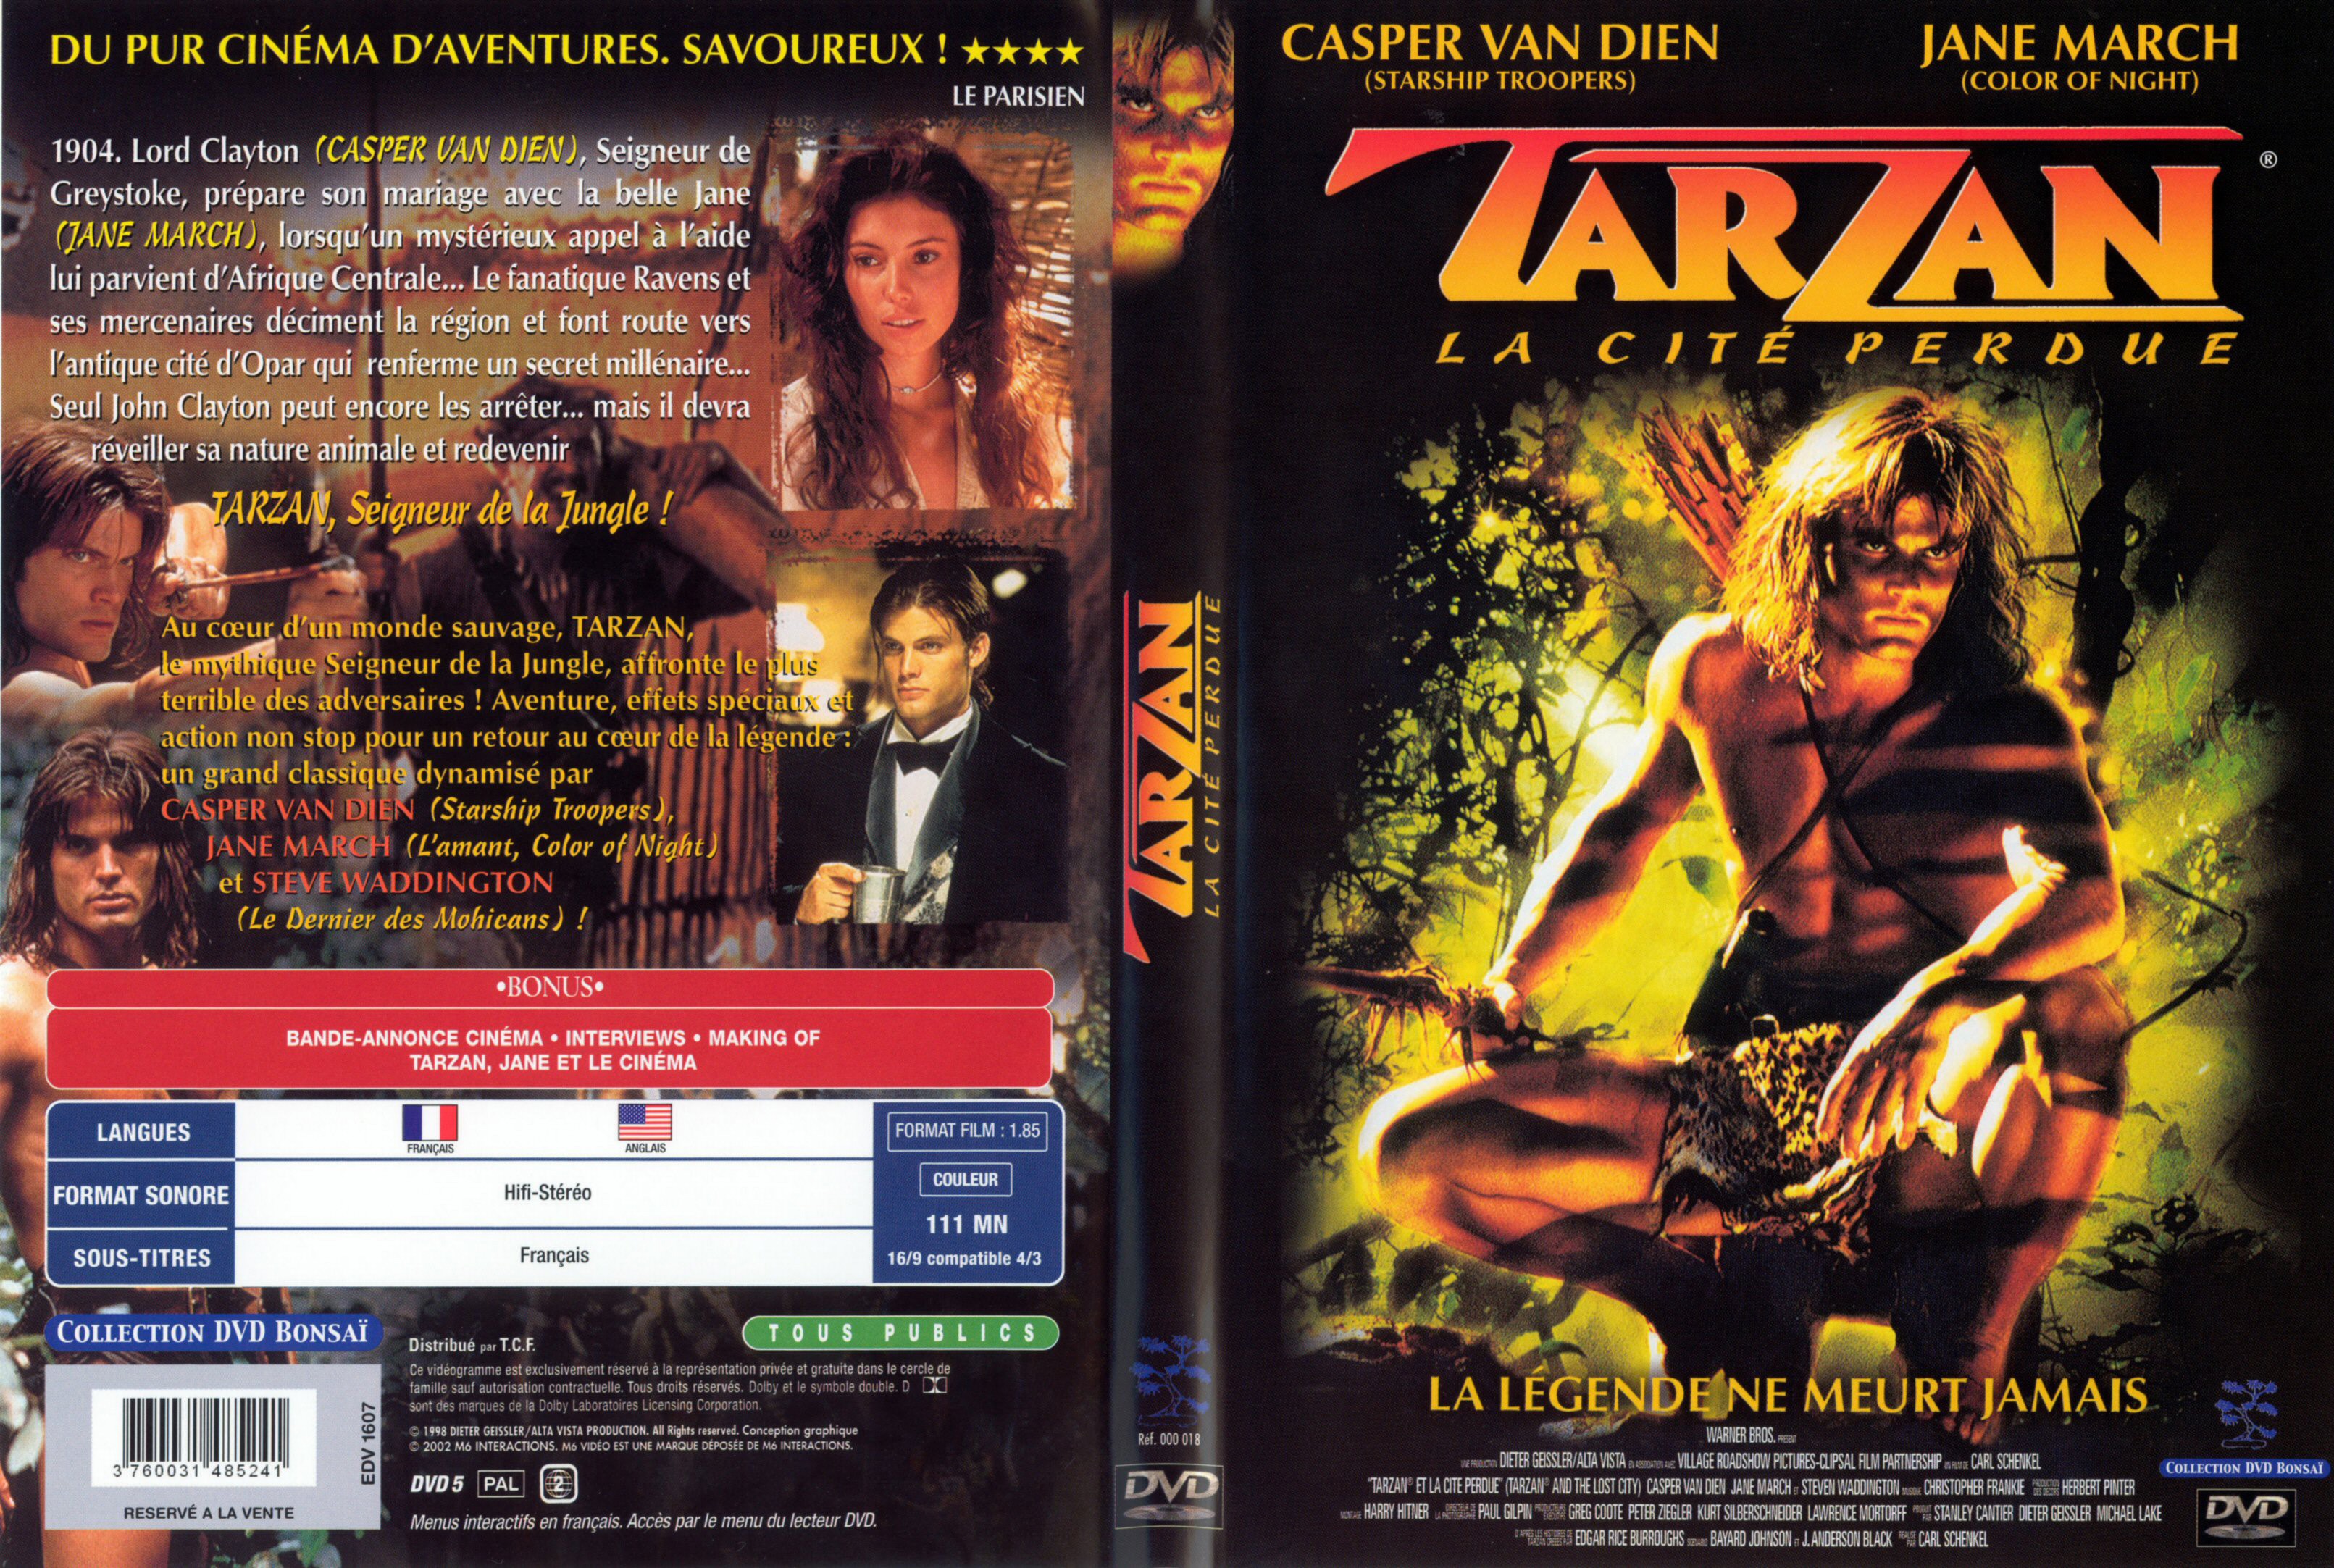 Jaquette DVD Tarzan la cit perdue